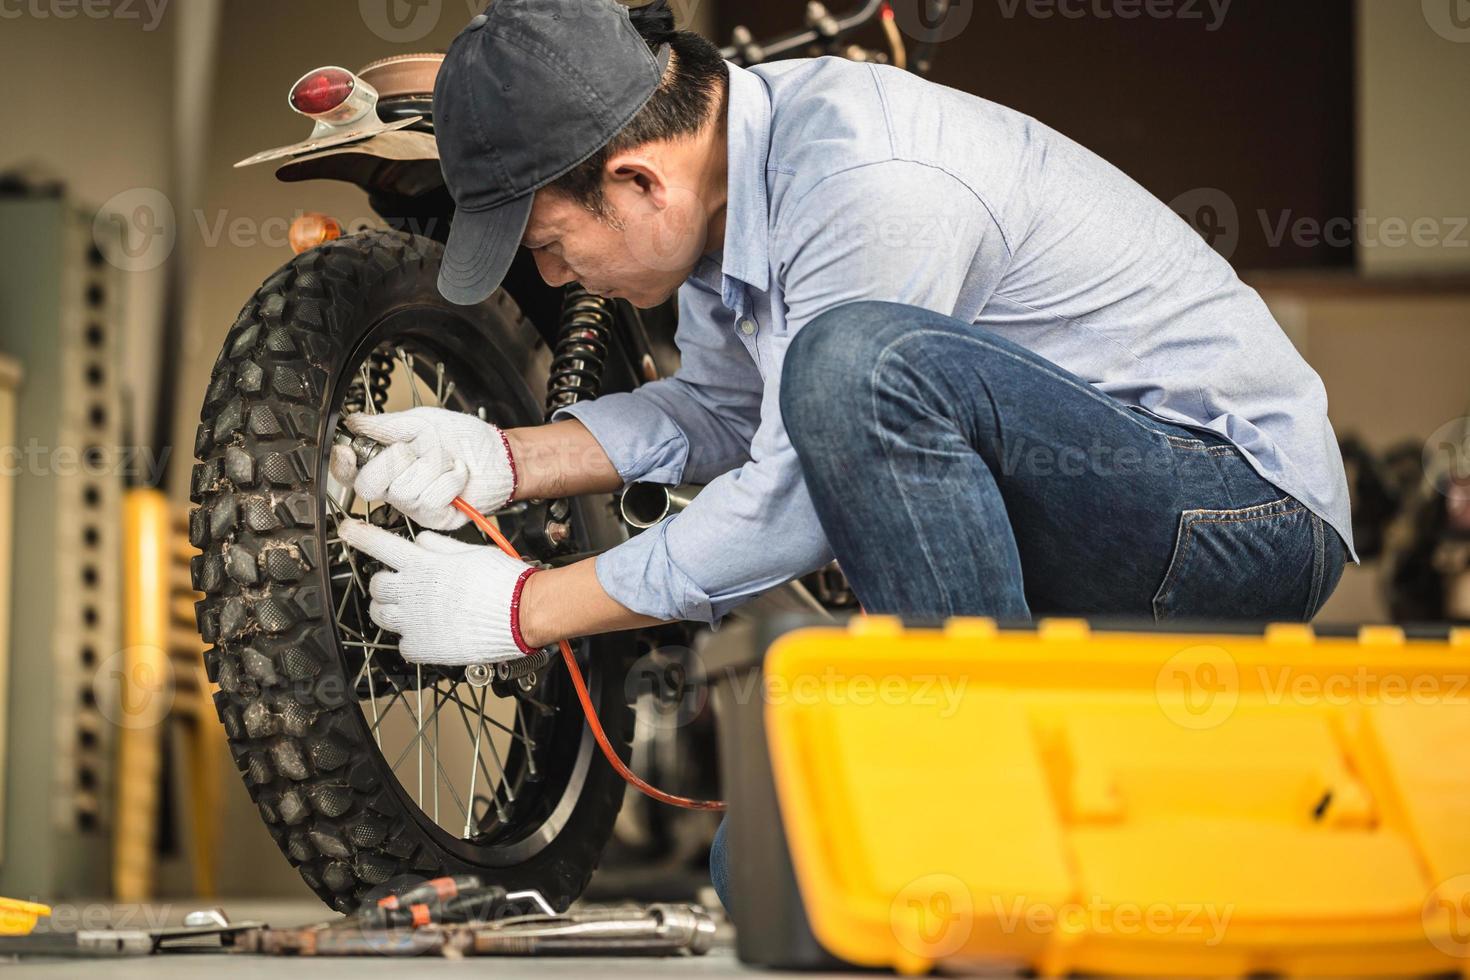 Mechanic fixing motorbike in workshop garage, Man repairing motorcycle in repair shop, Repairing and maintenance concepts photo